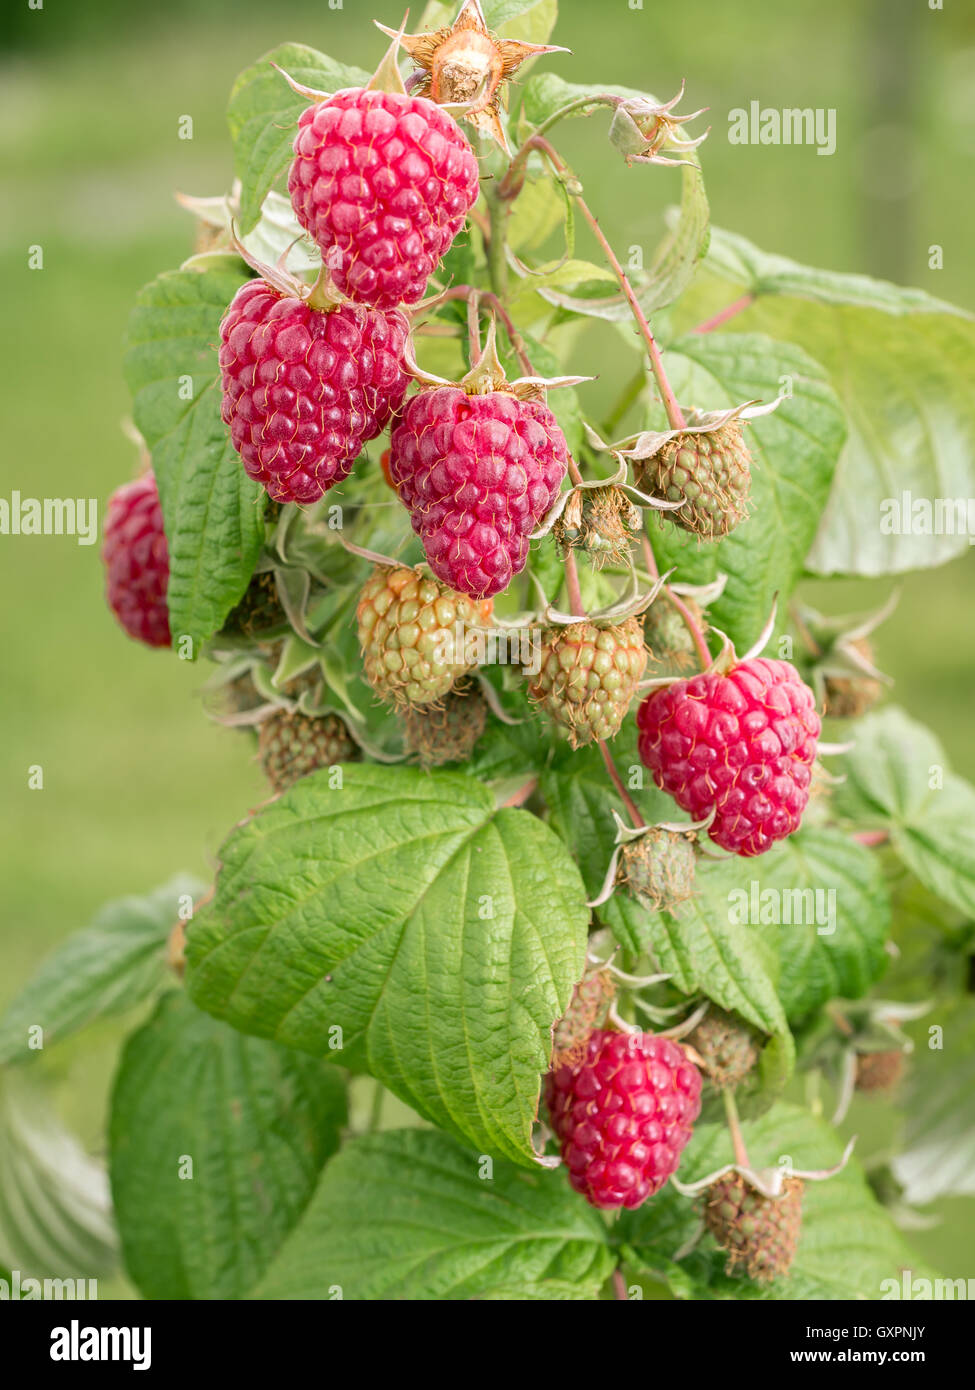 Ripe and juicy raspberries growing on shrub Stock Photo